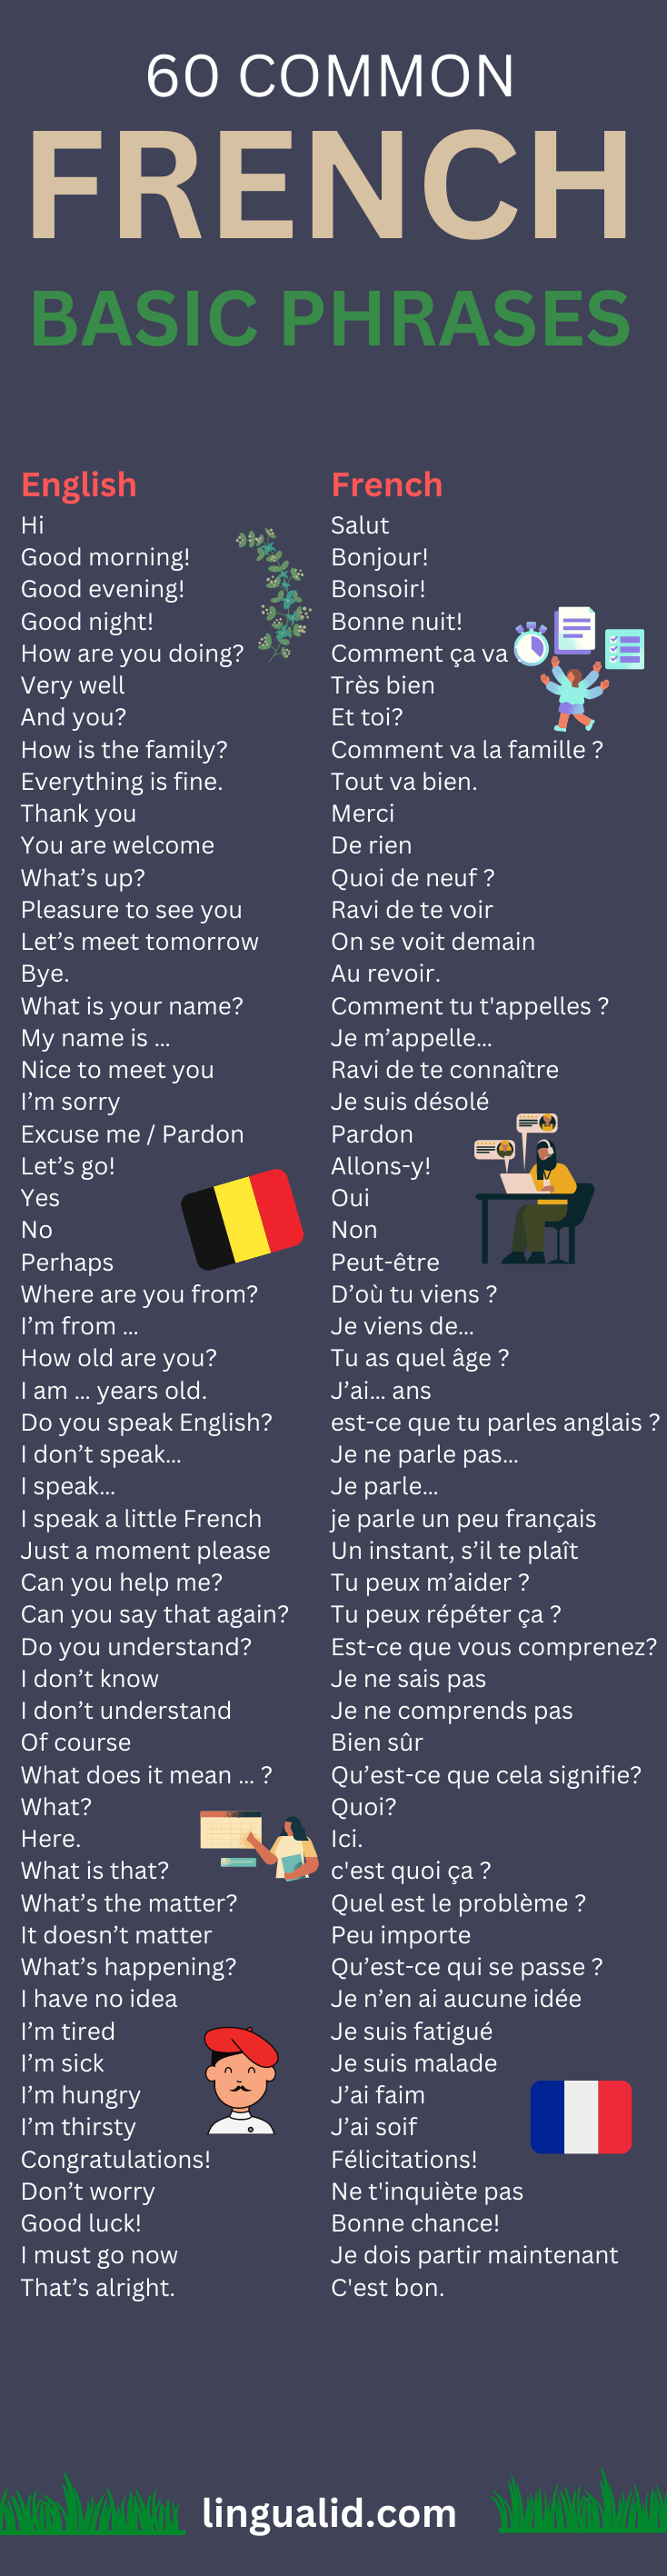 basic french phrases visual